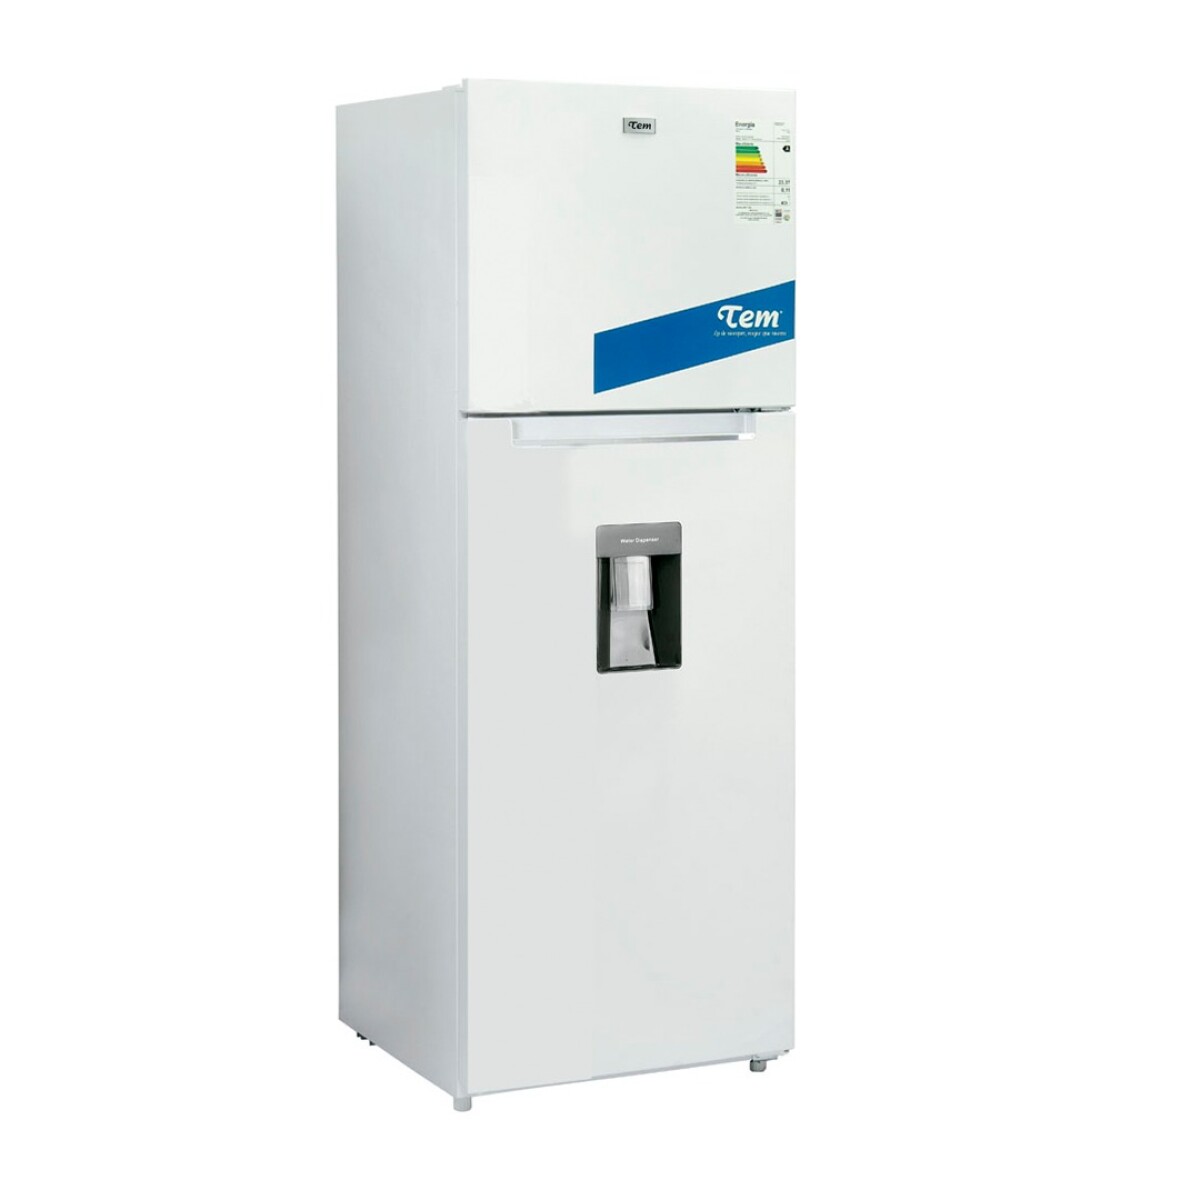 Refrigerador Tem Turnf 395 Wdw Frío Seco + Puerta Reversible Freezer - 001 